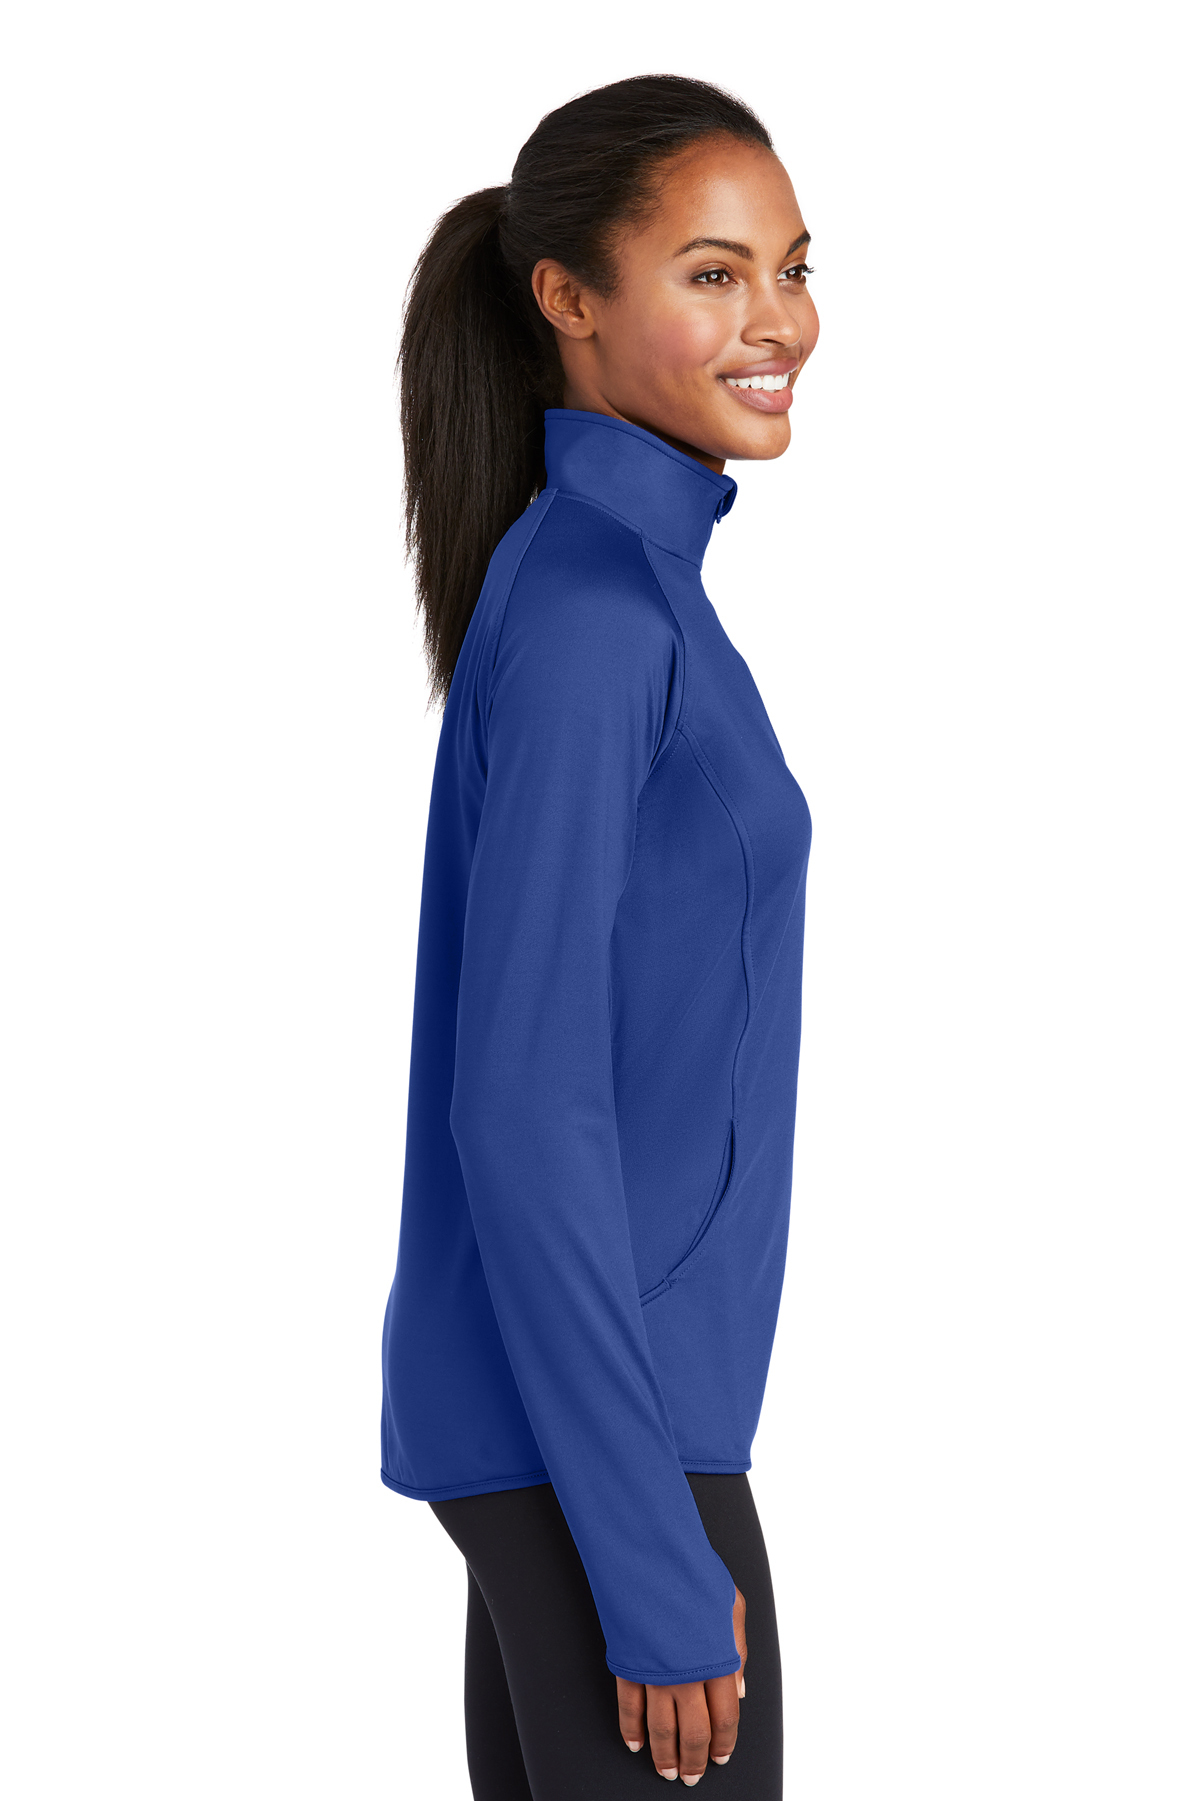 Sport-Tek Ladies Sport-Wick Stretch 1/4-Zip Pullover | Product | Sport-Tek